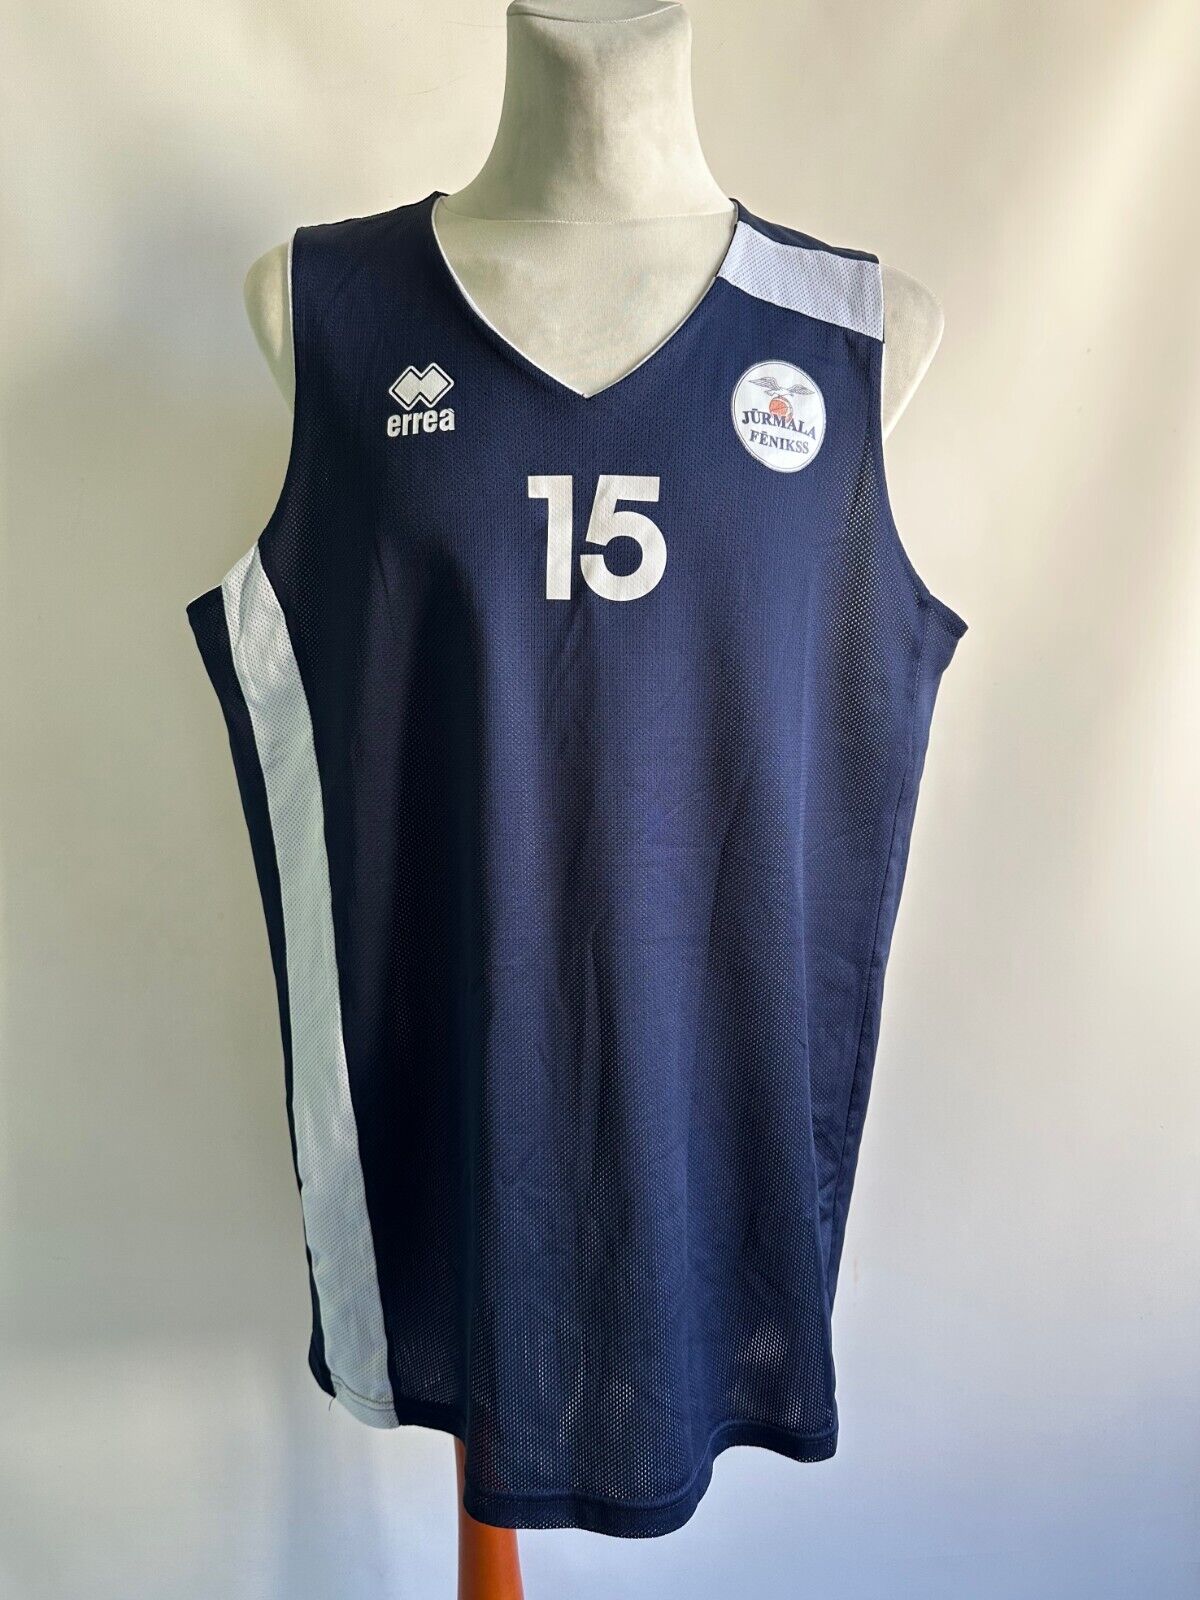 Latvia Jurmala Basketball Reversible shirt sleeveless | eBay